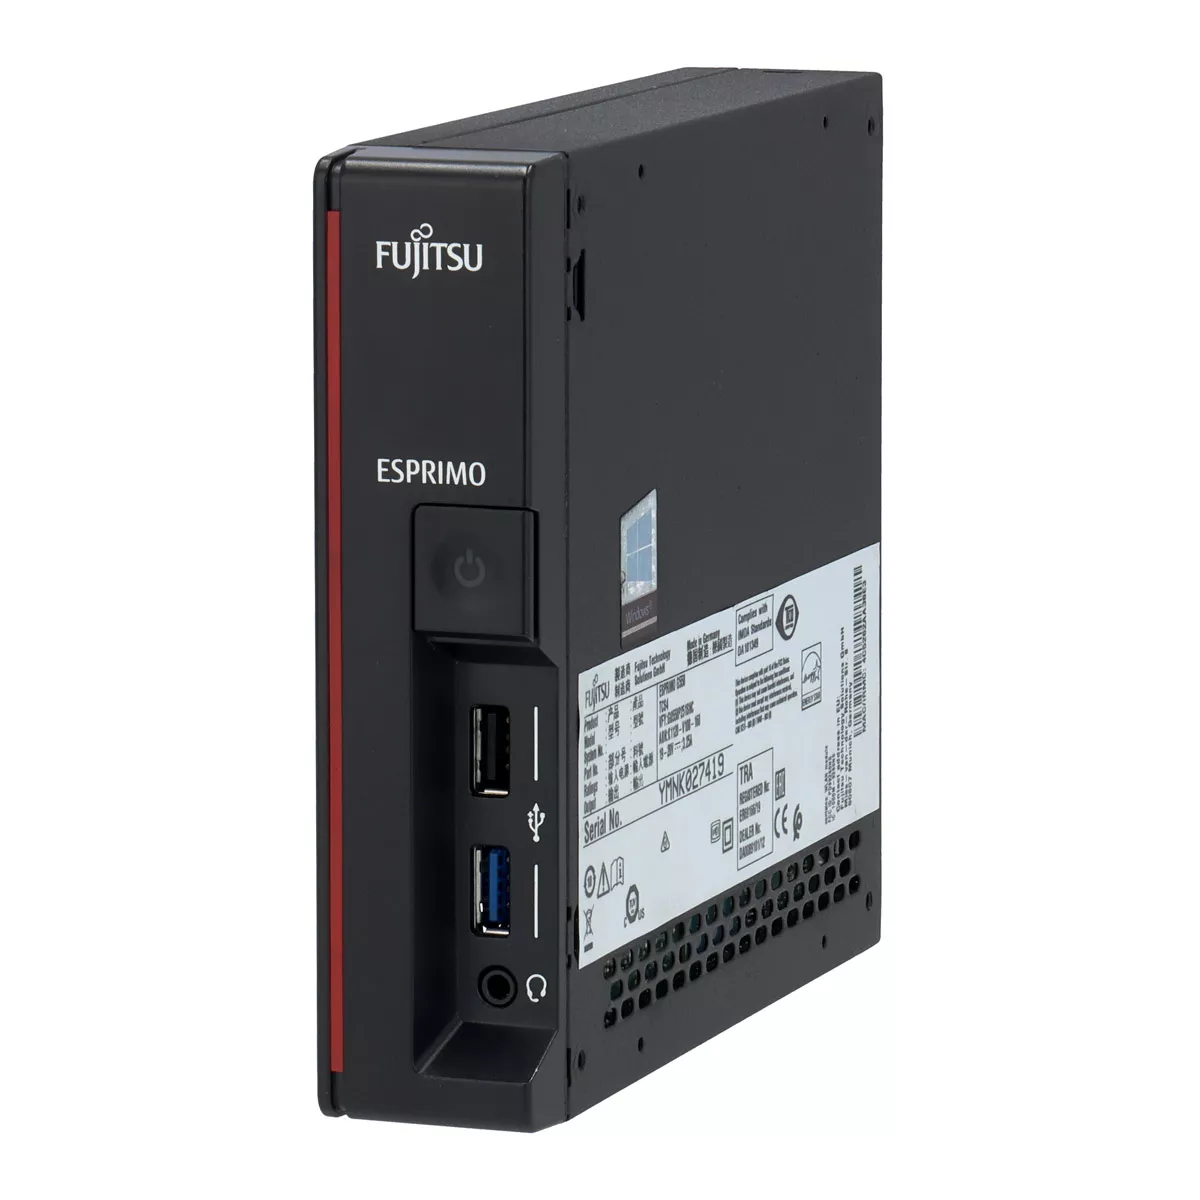 Fujitsu Esprimo G558 Core i5 8400 240 GB nVME SSD W-Lan A+